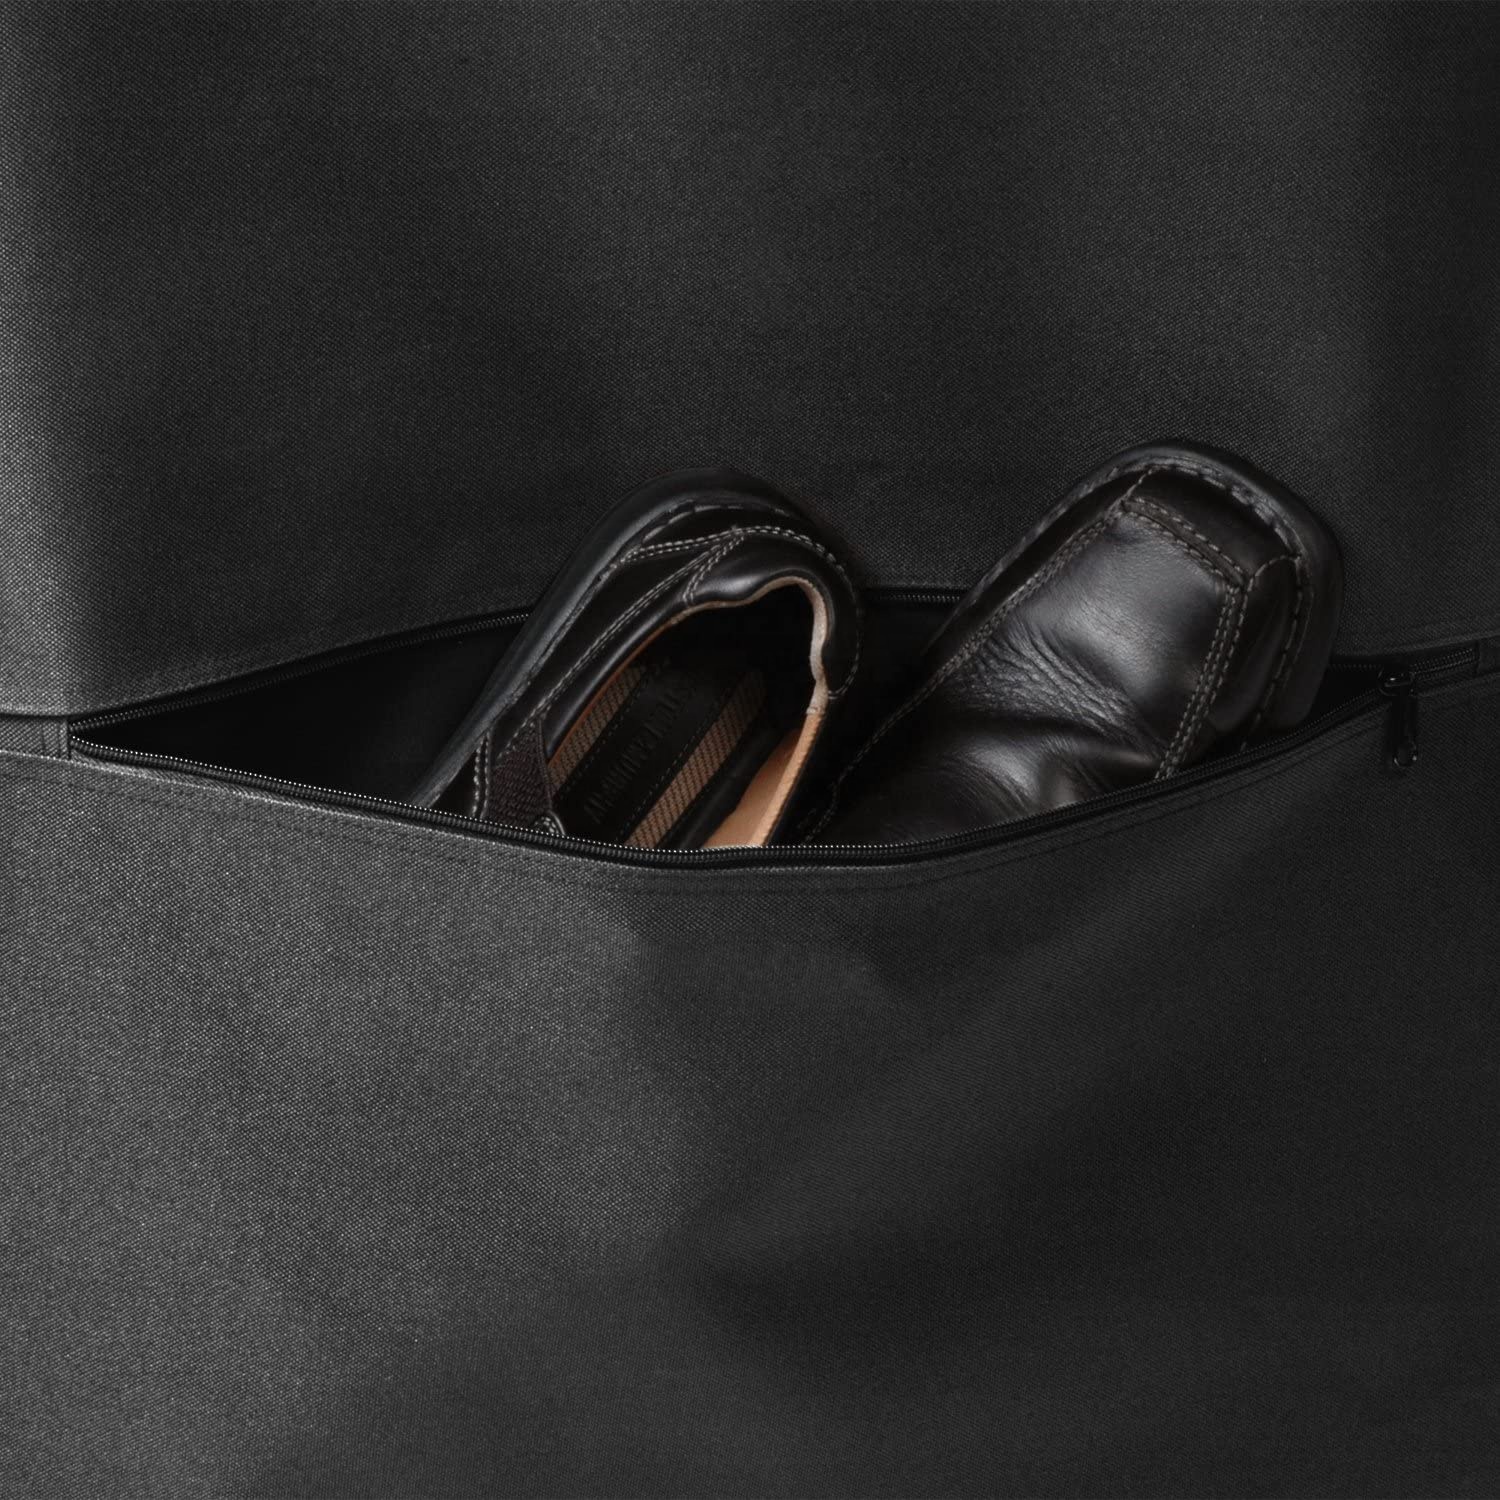 Waterproof Full Zipper with Shoes Pocket Garment / Suit Bag